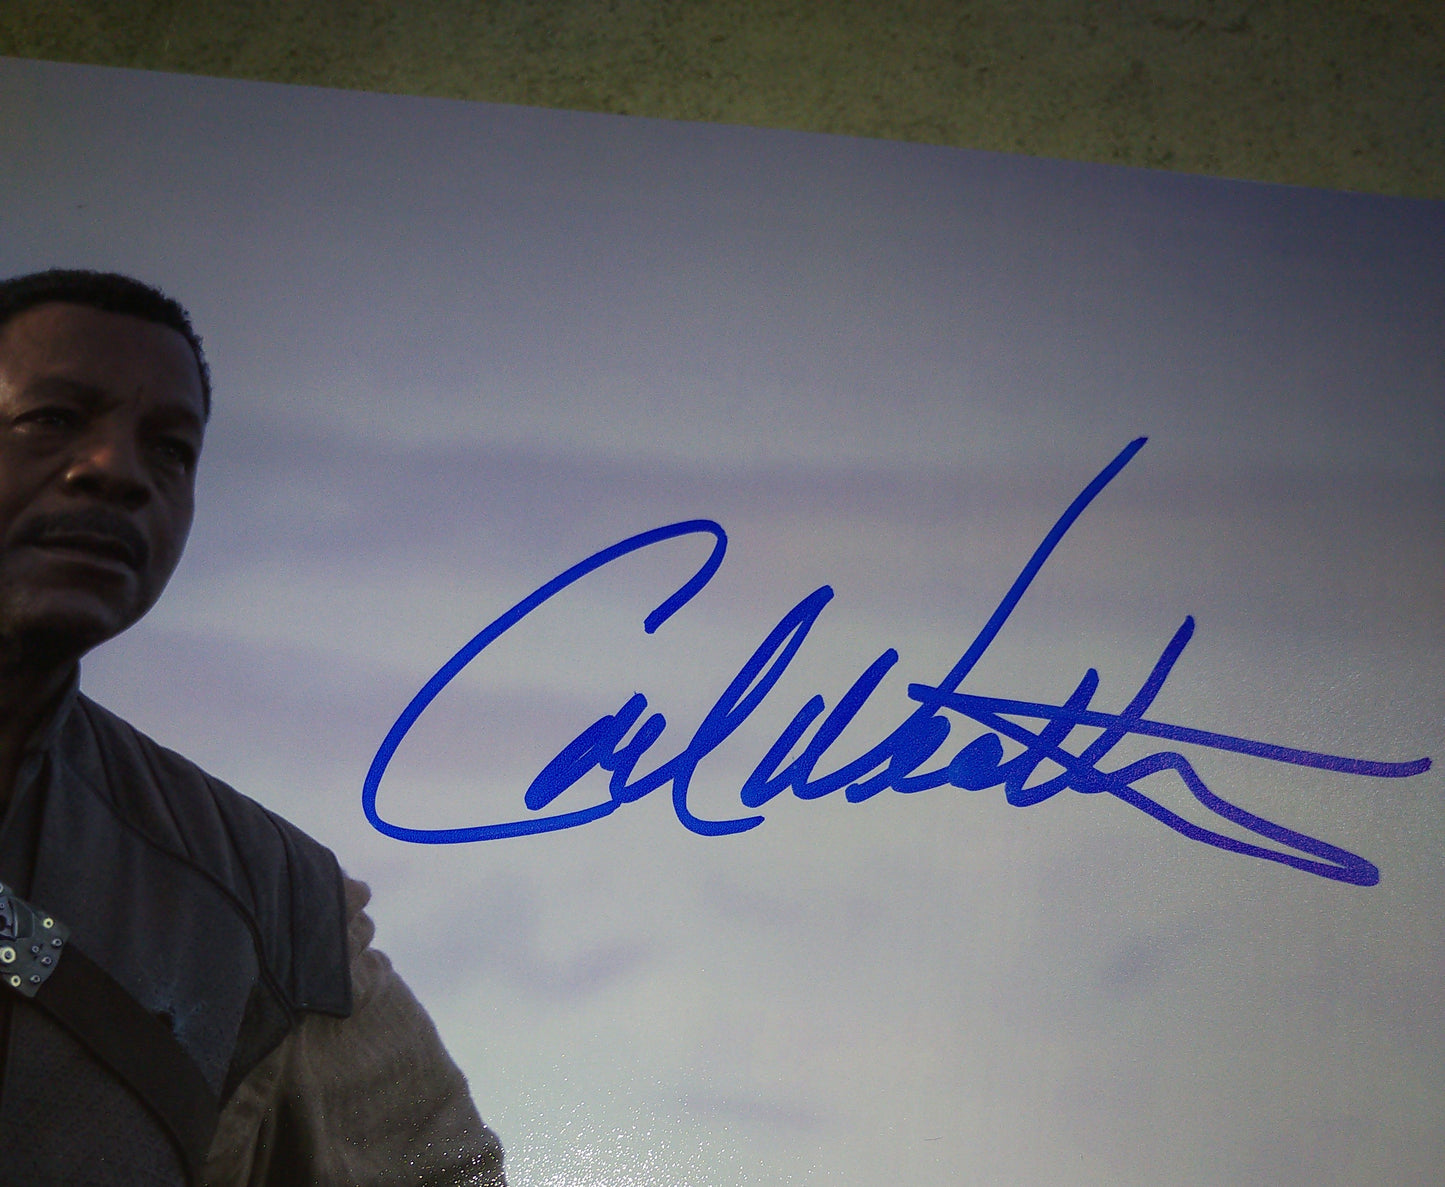 Carl Weathers Hand Signed Autograph 8x10 Photo COA